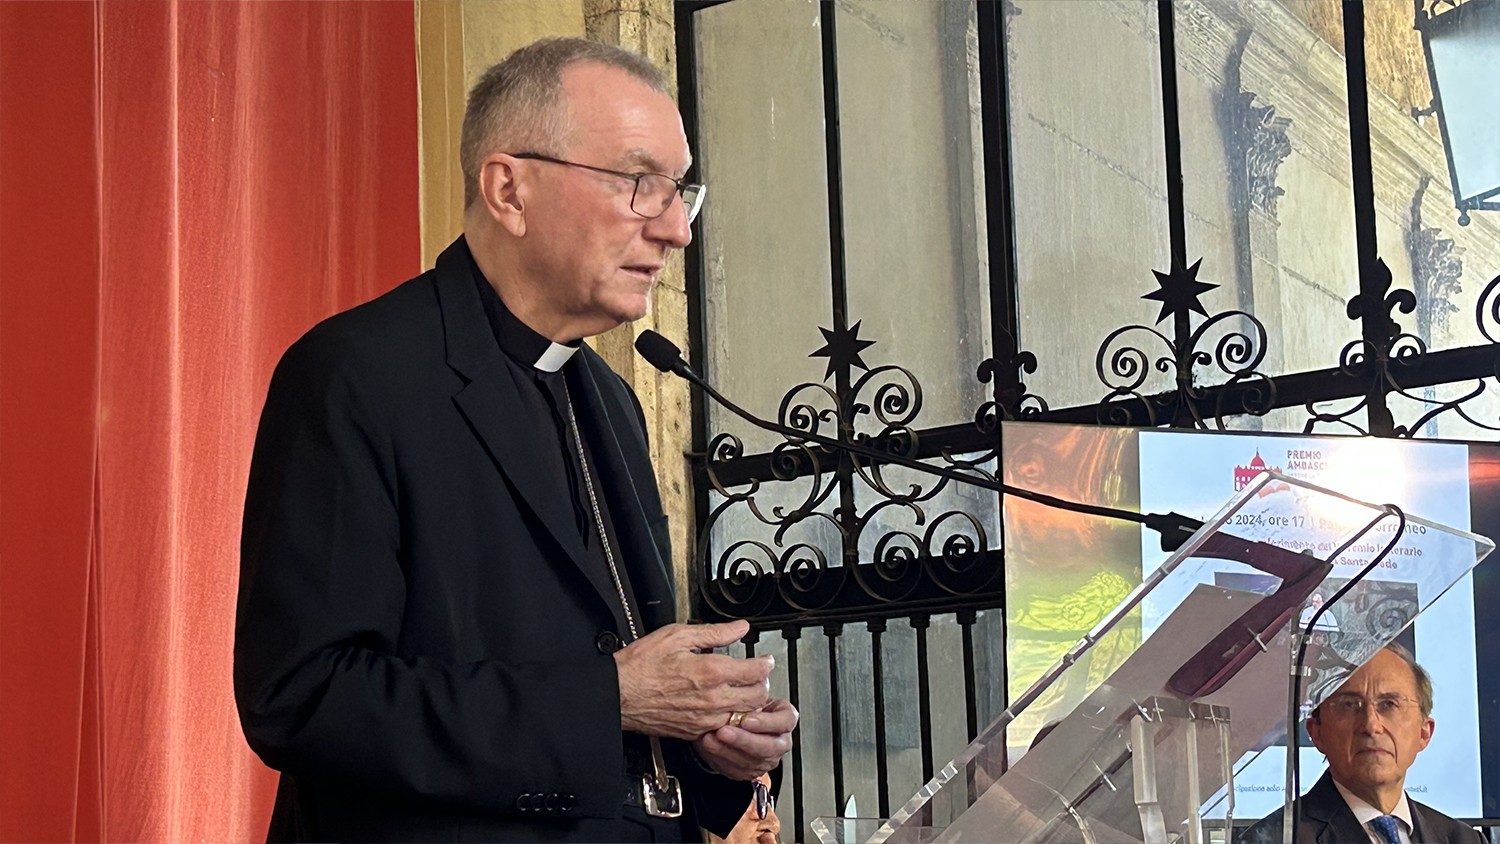 Cardinal Parolin: “The concept of just war must be reviewed”